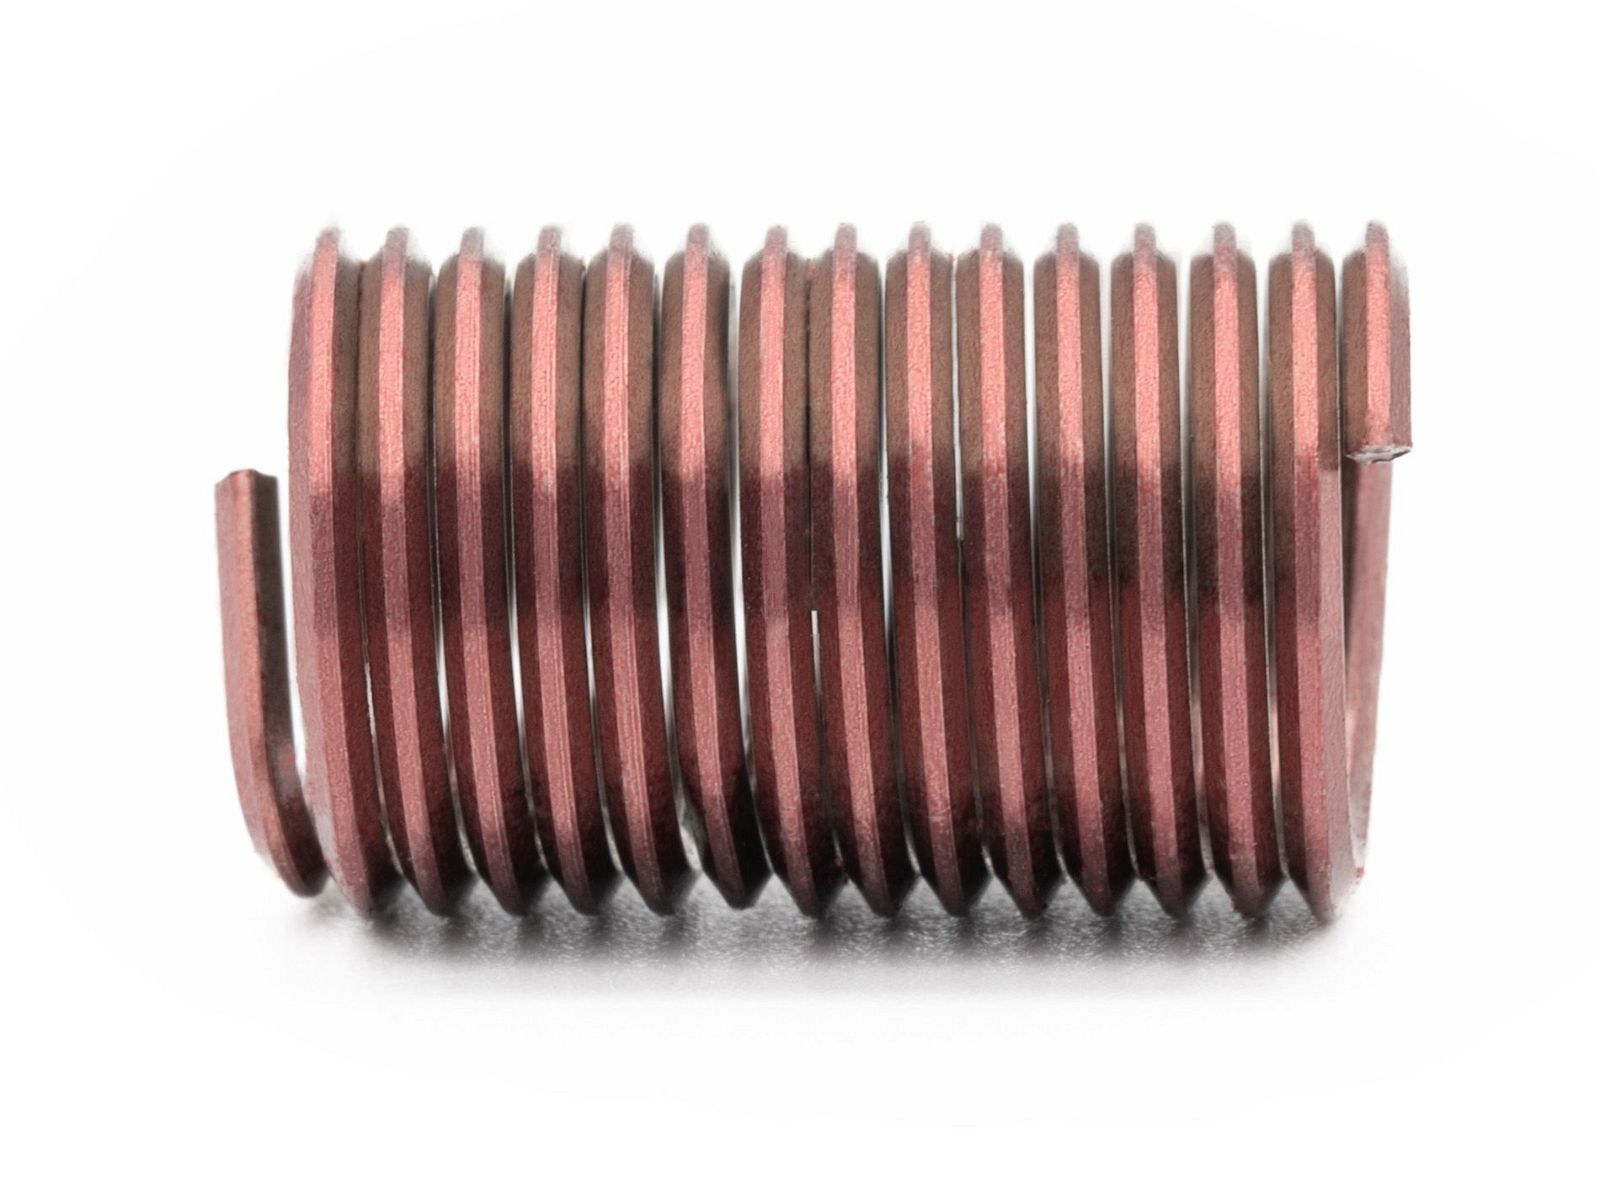 BaerCoil Drahtgewindeeinsätze M 7 x 1,0 - 2,5 D (17,5 mm) - screw grip (schraubensichernd) - 10 Stk.